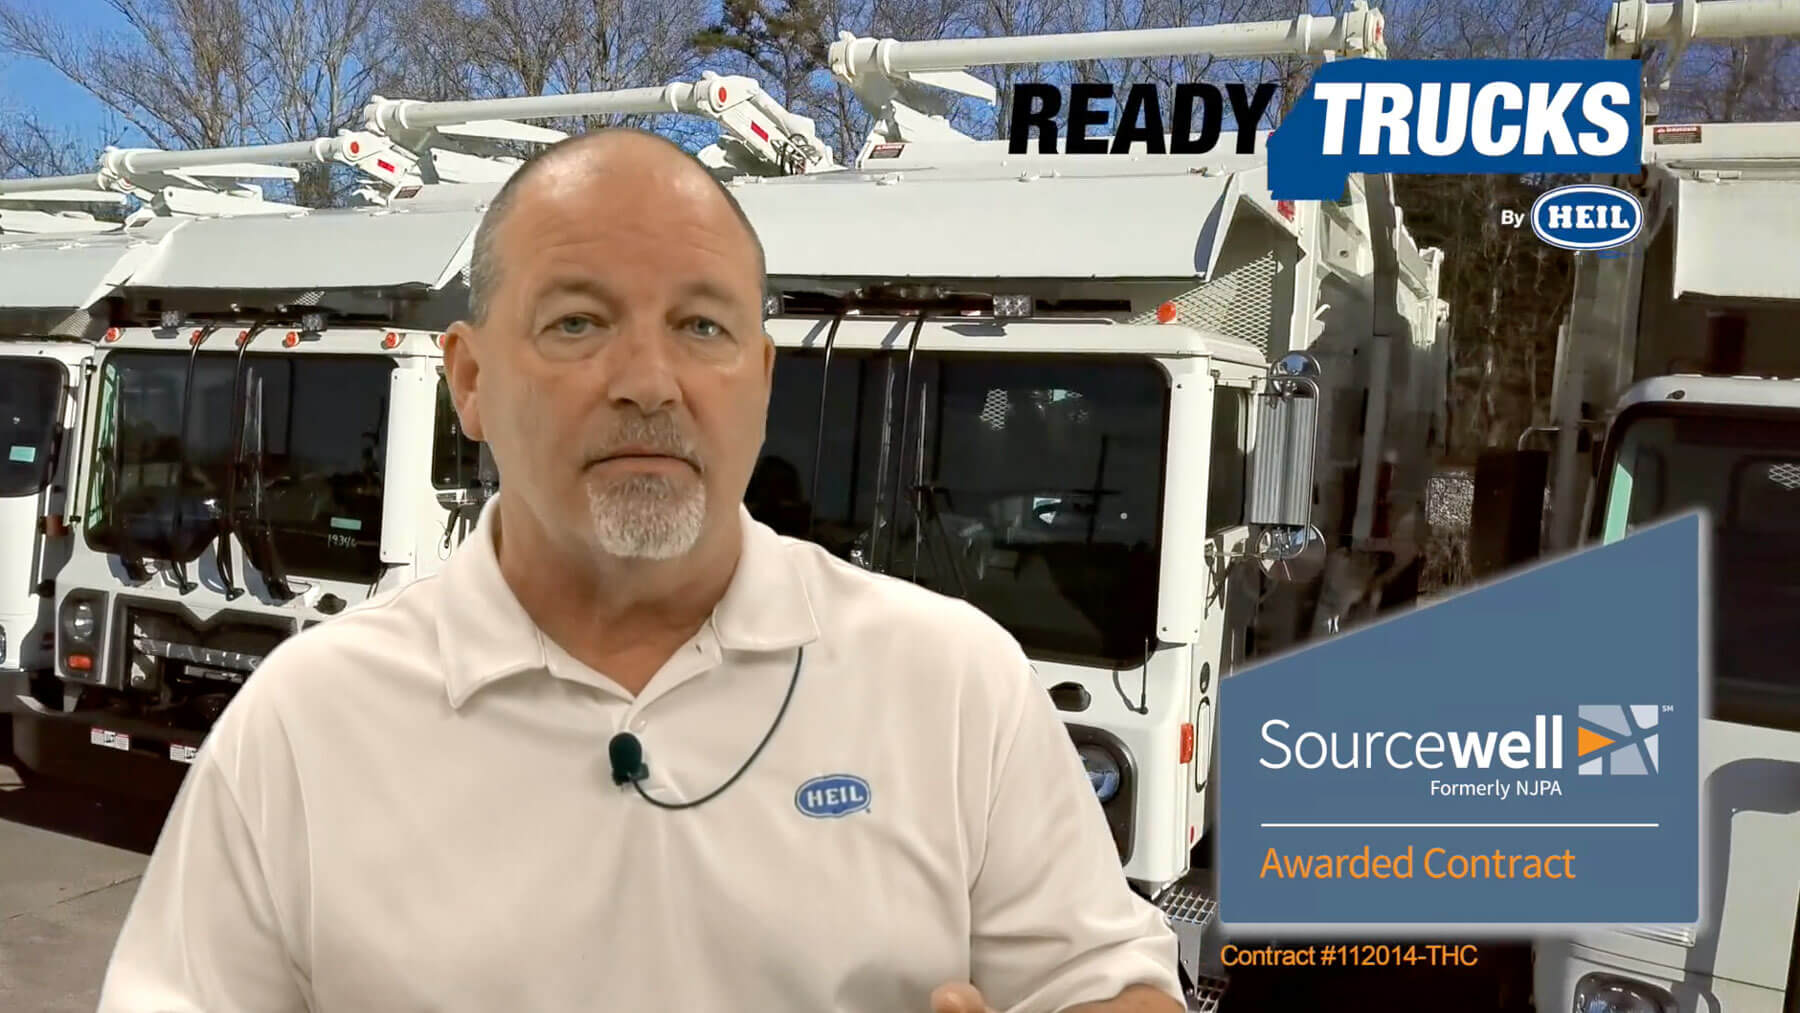 Heil Ready Truck program to purchase trucks through Sourcewell video